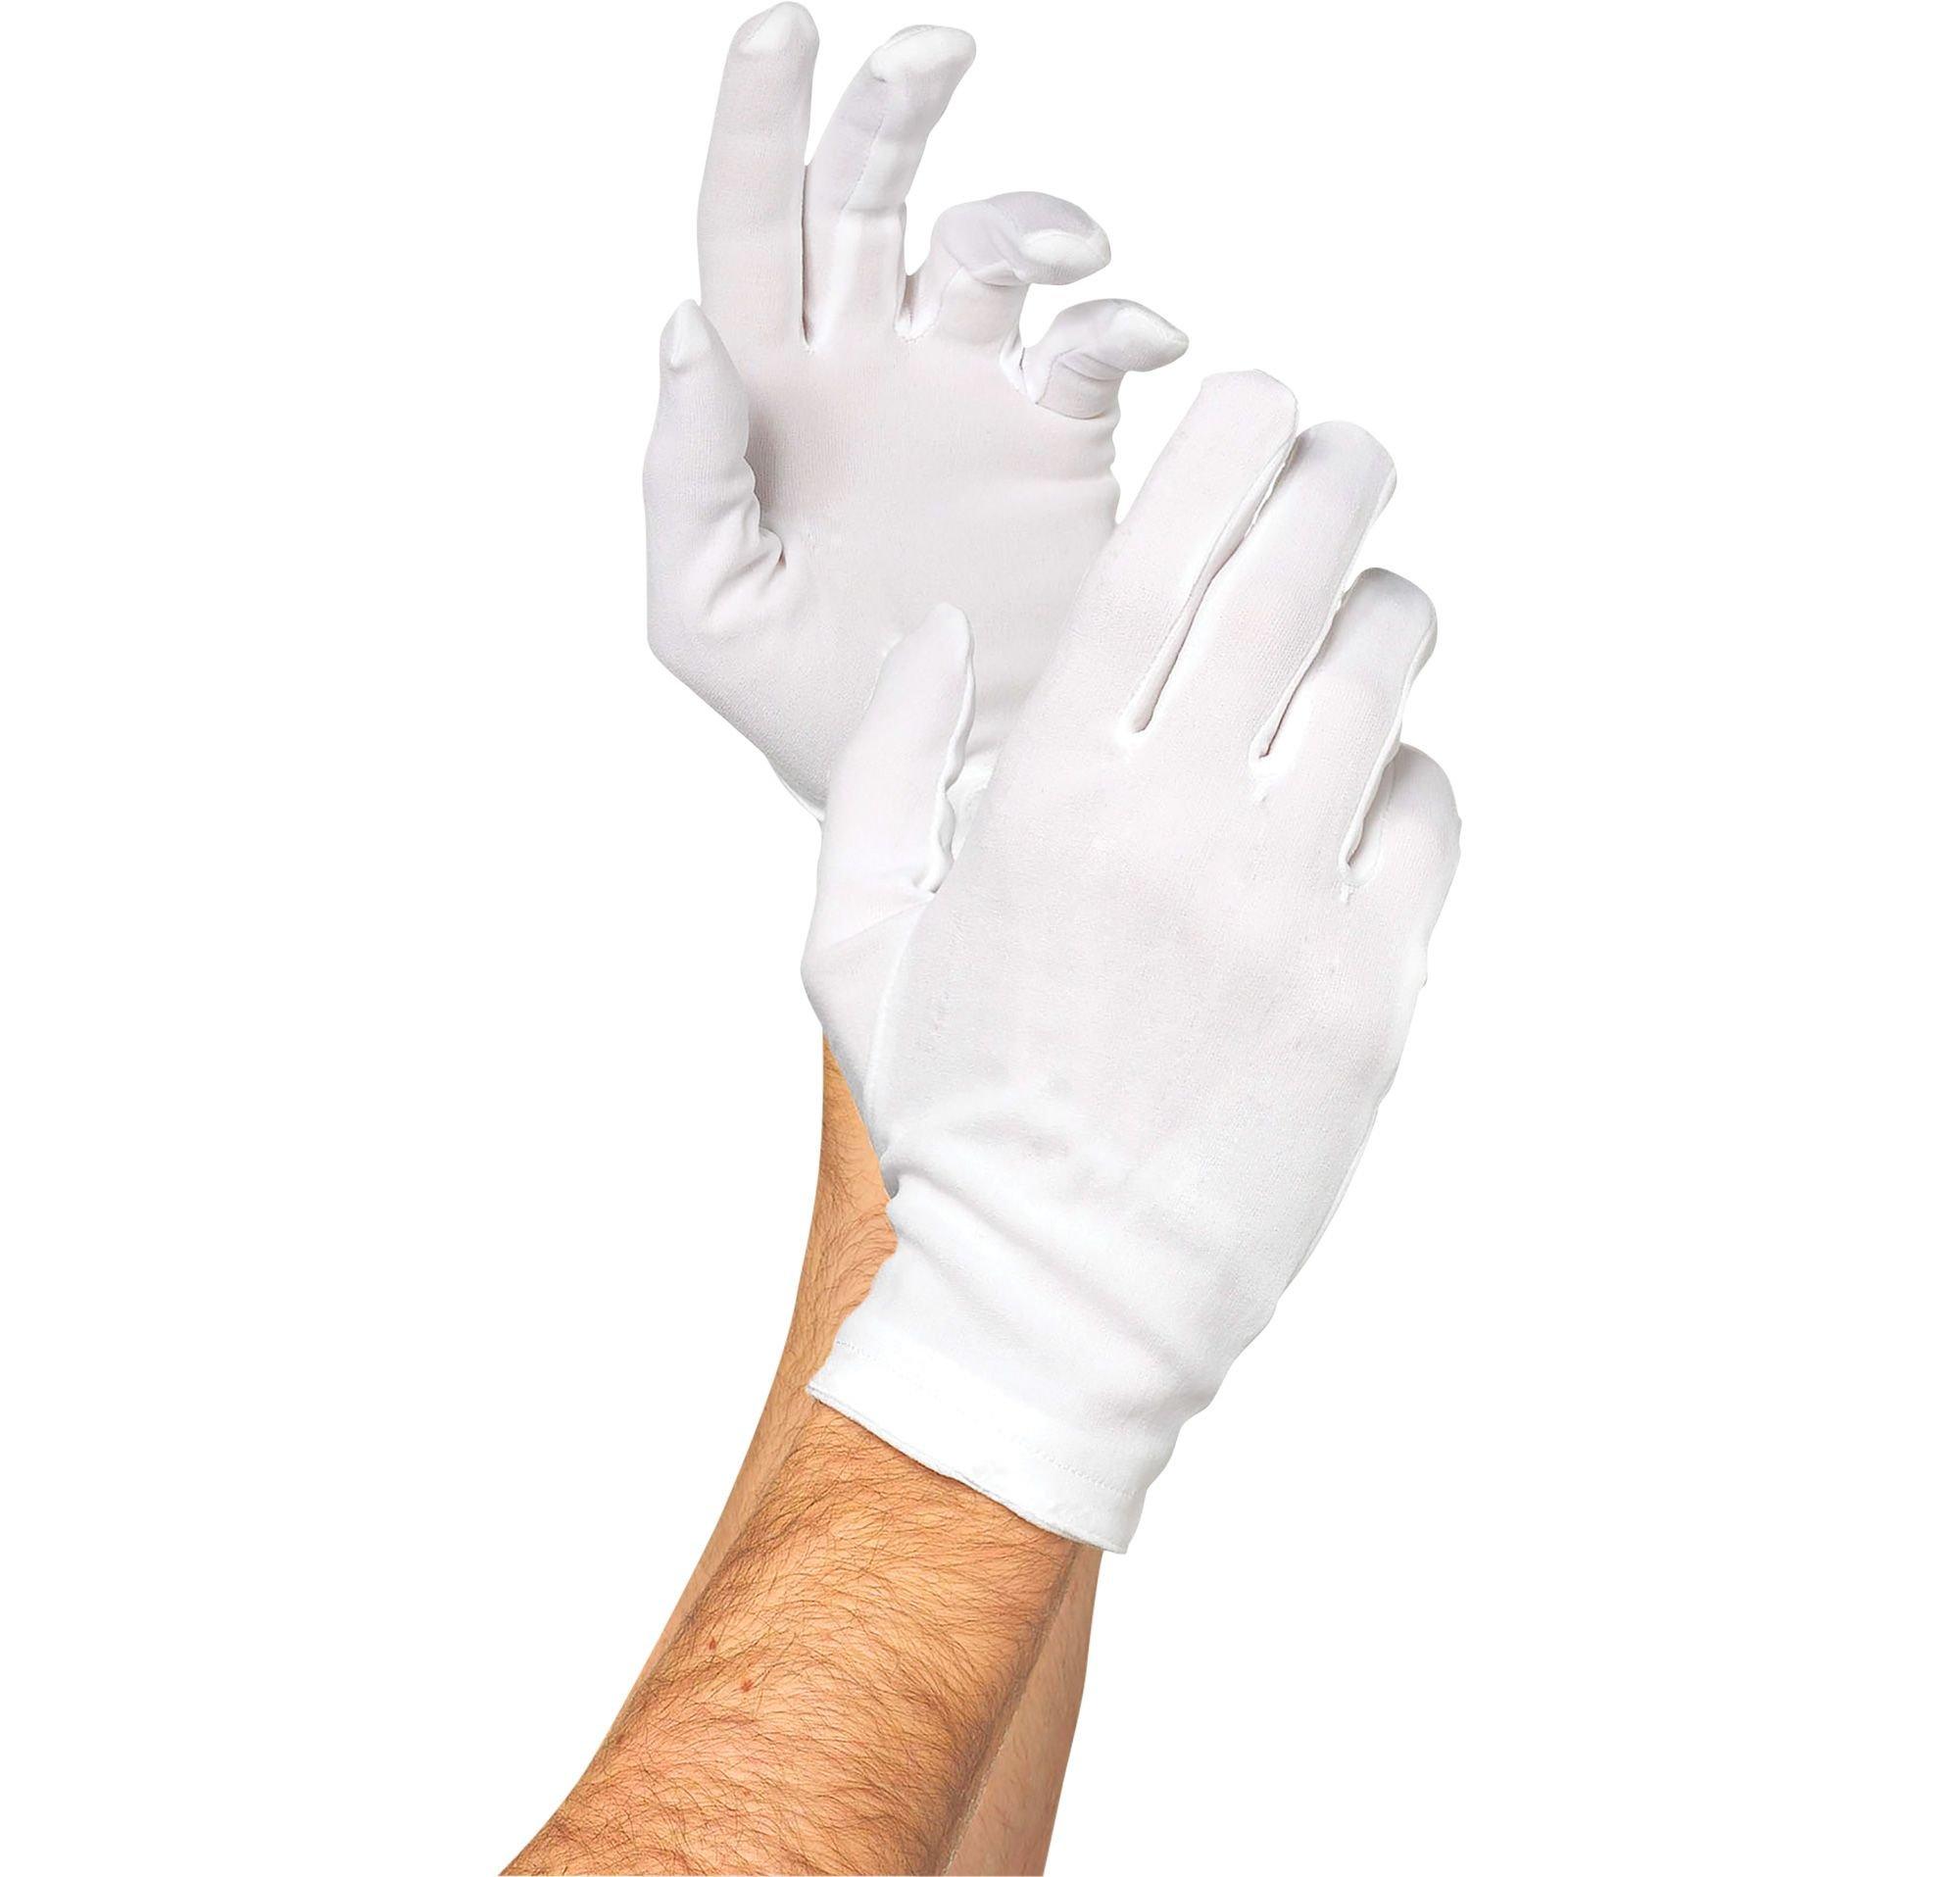 Buy 100% Premium White Cotton Gloves